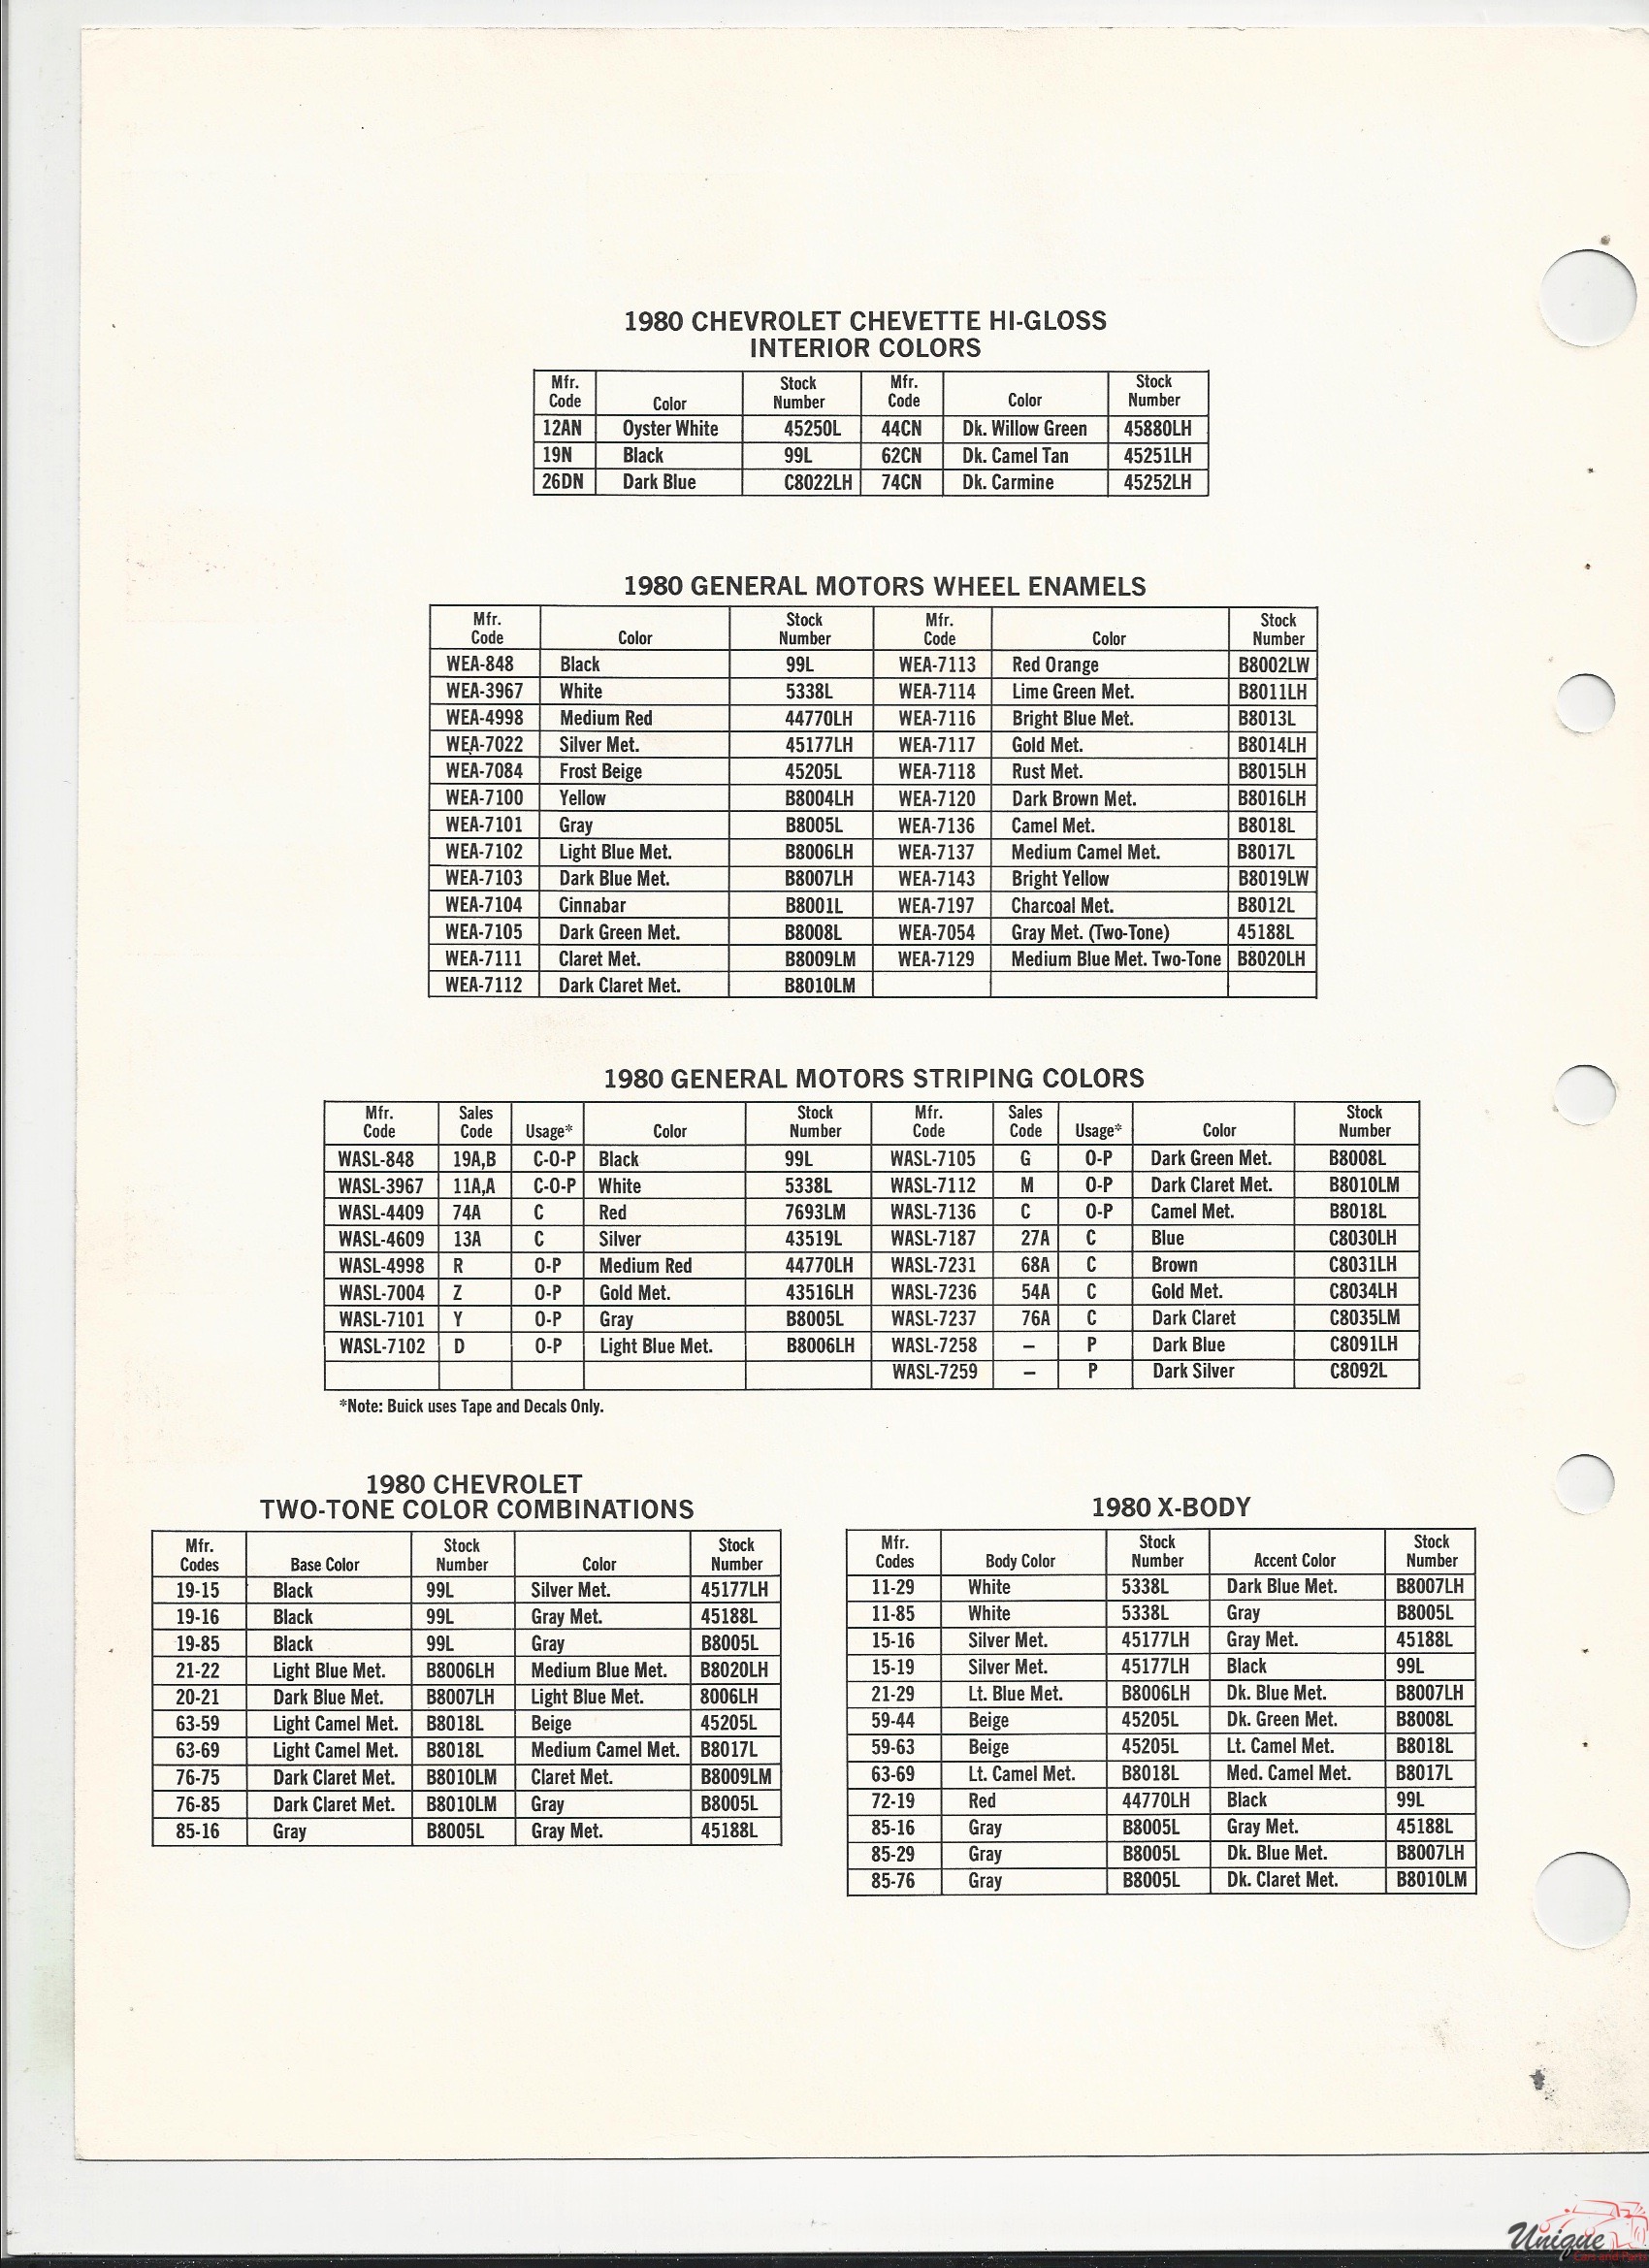 1980 GM-3 Paint Charts